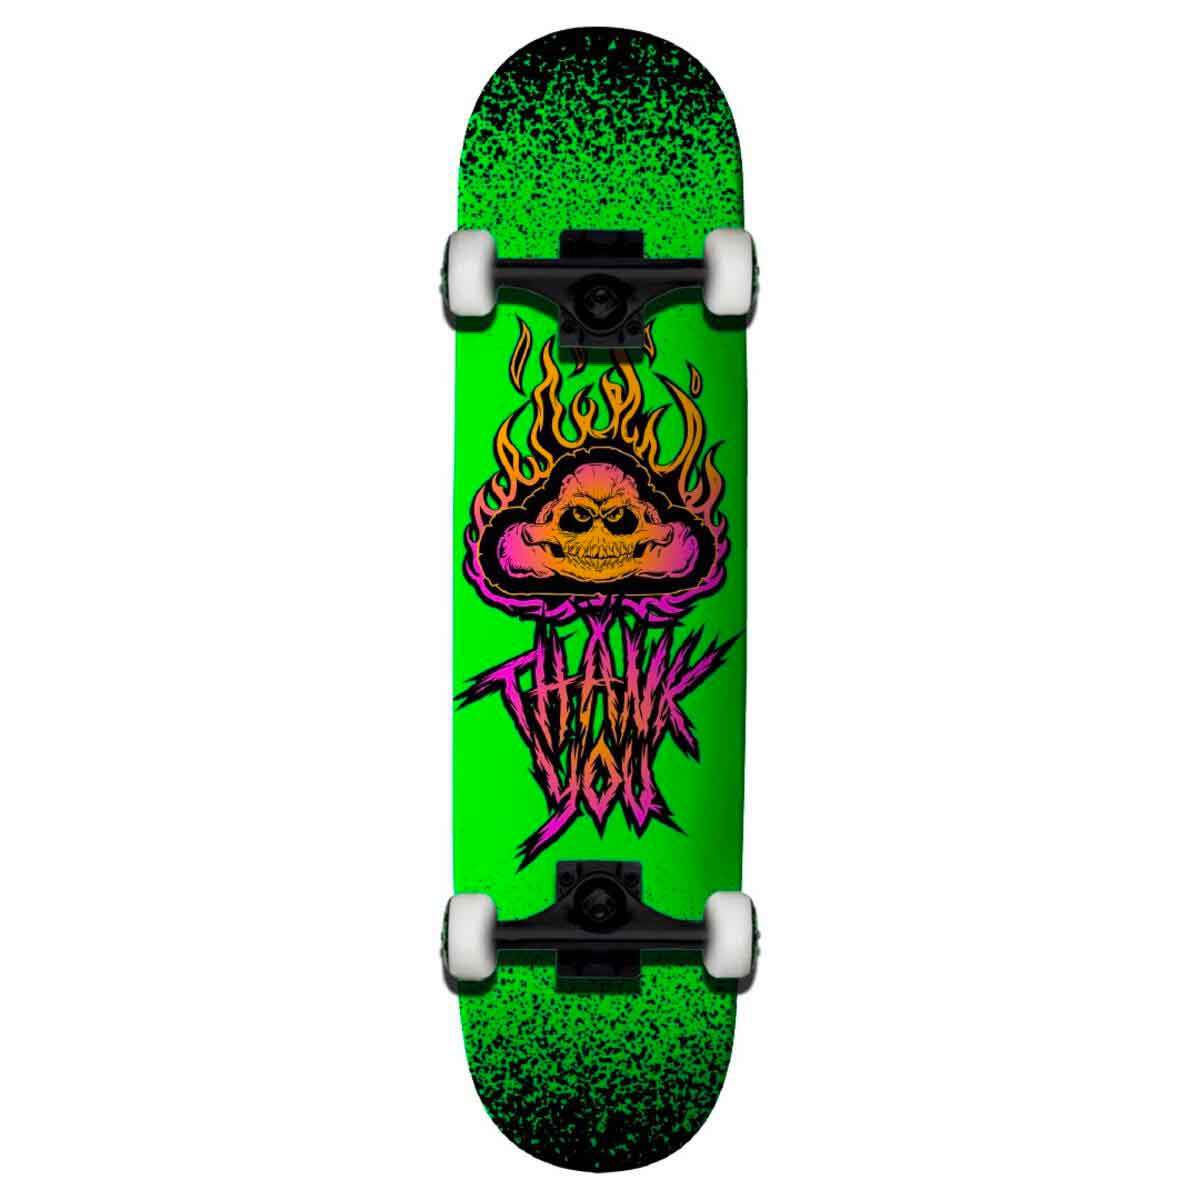 Thank You - Skateboard - Complete skateboards - Skull Cloud  8.5" (Neon) Complete Board